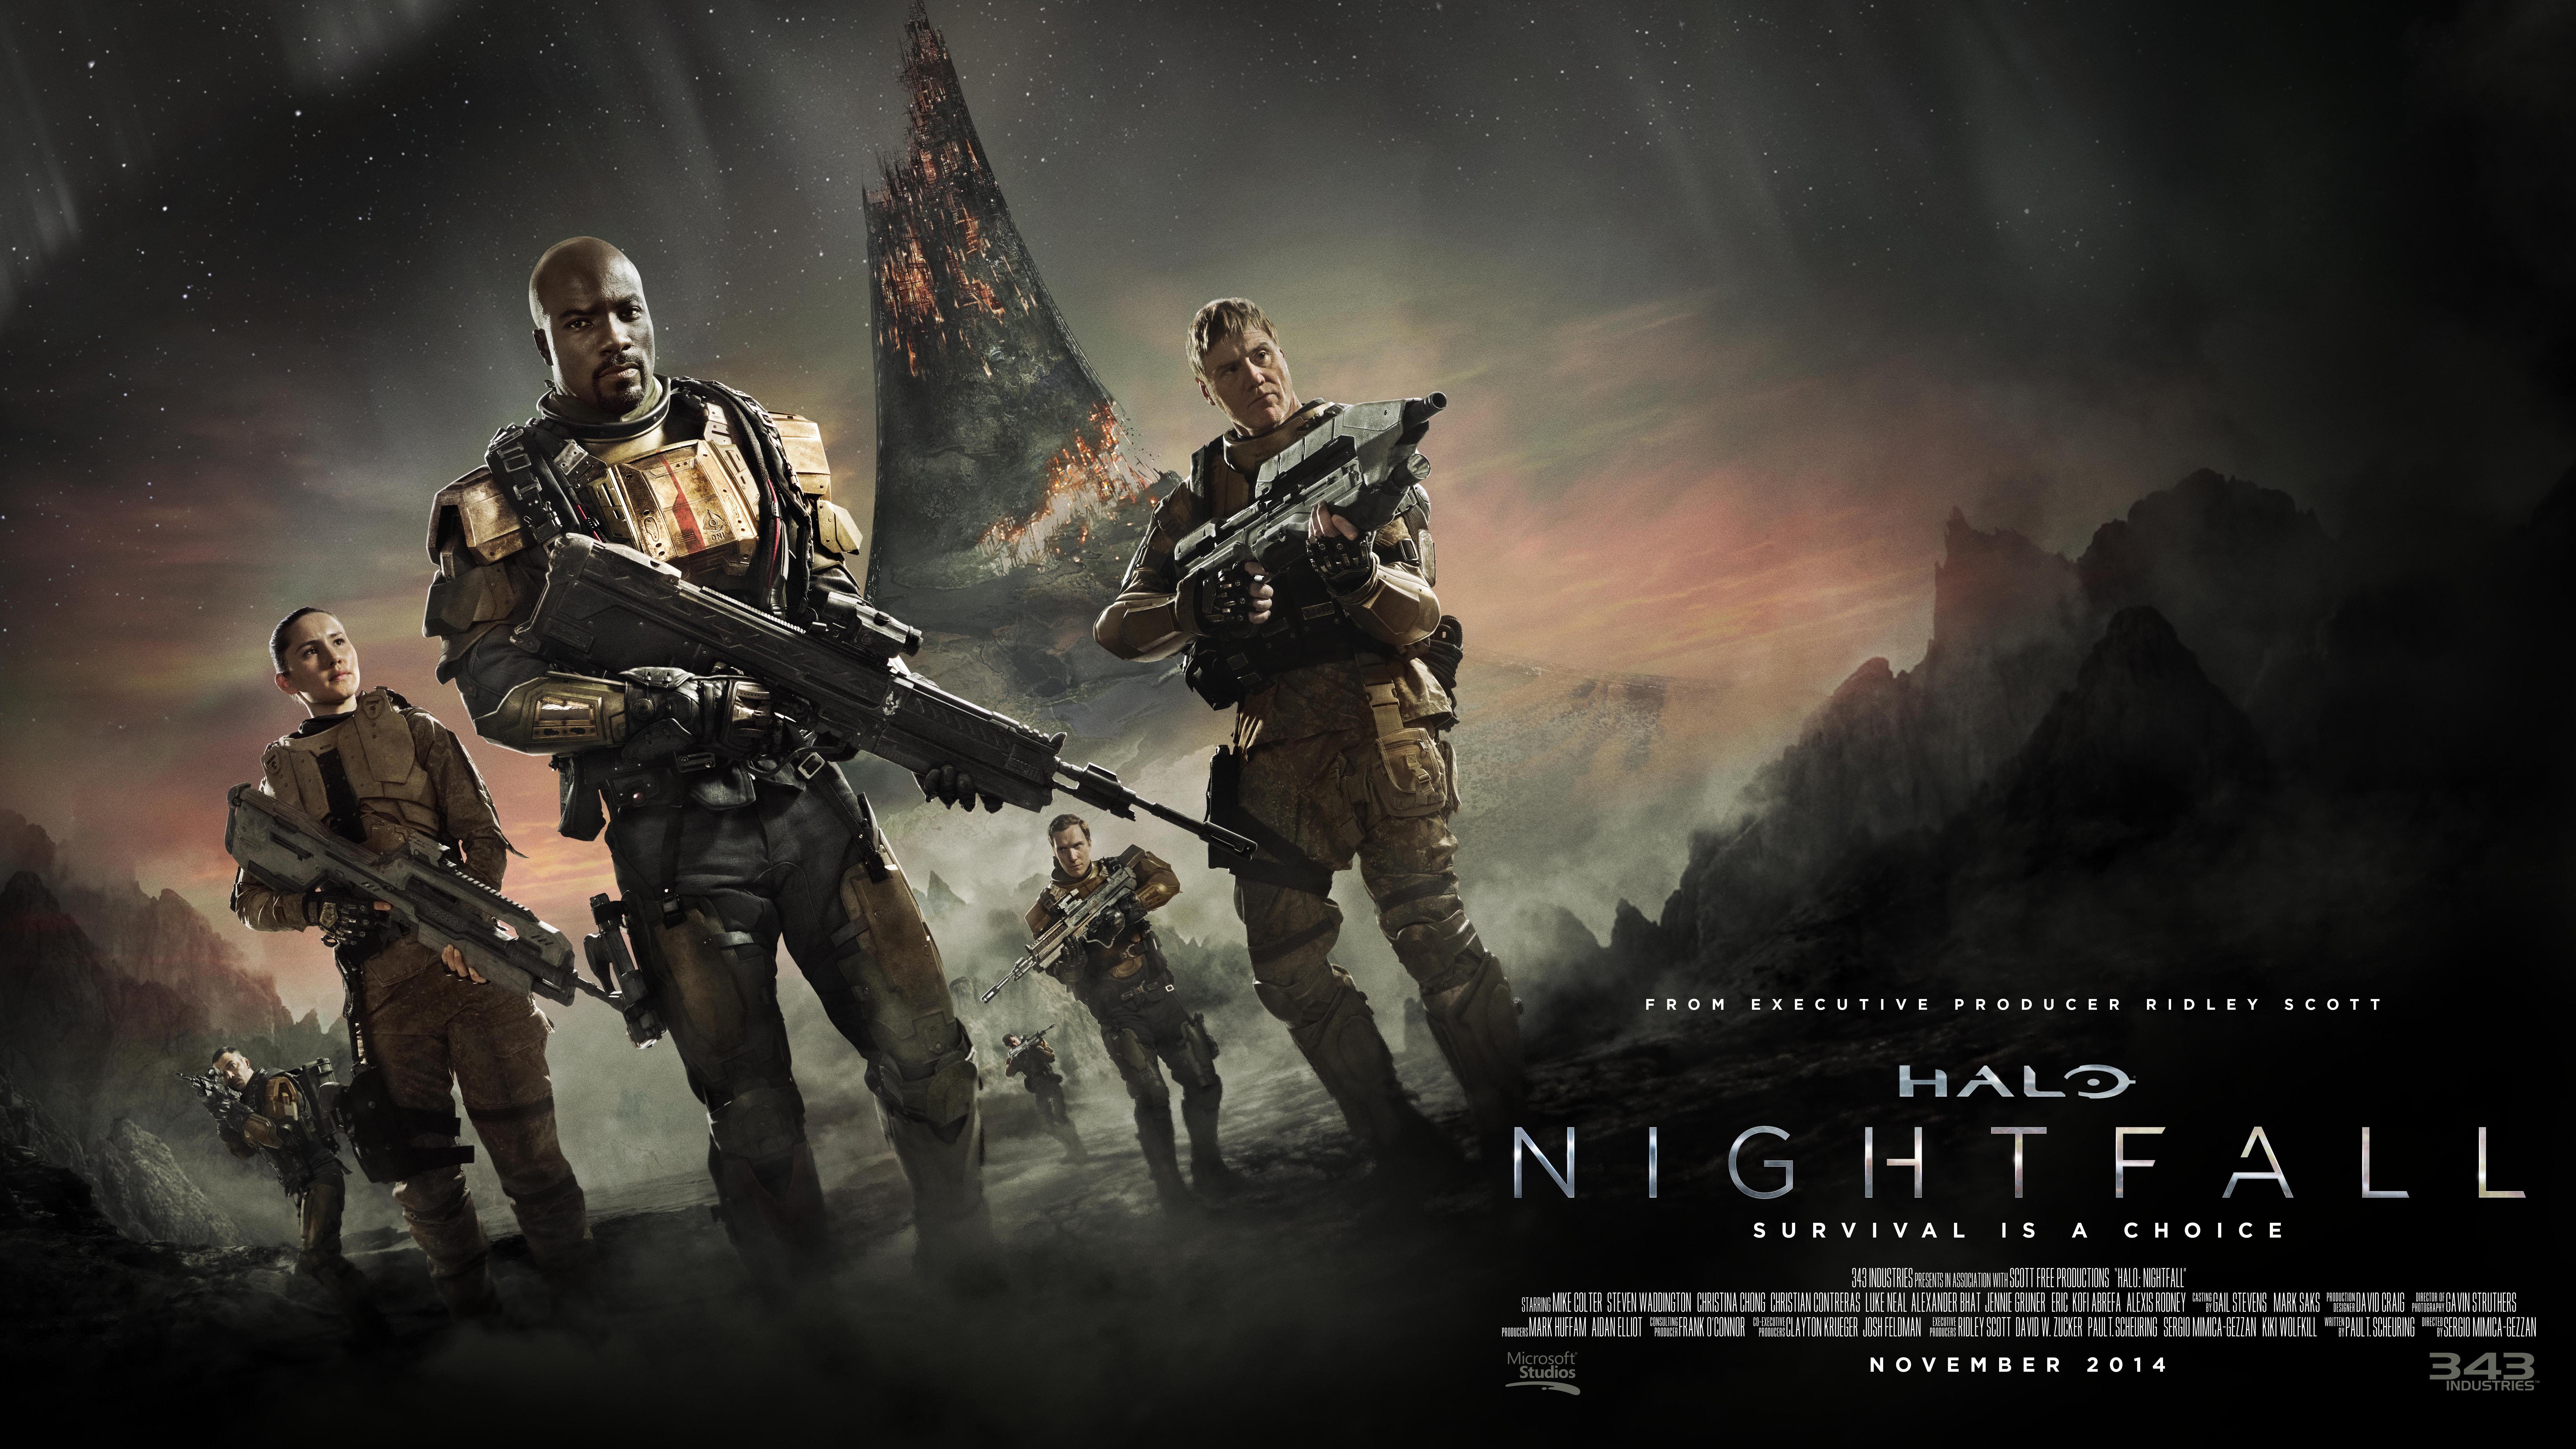 Halo: Nightfall - Full Cast & Crew - TV Guide